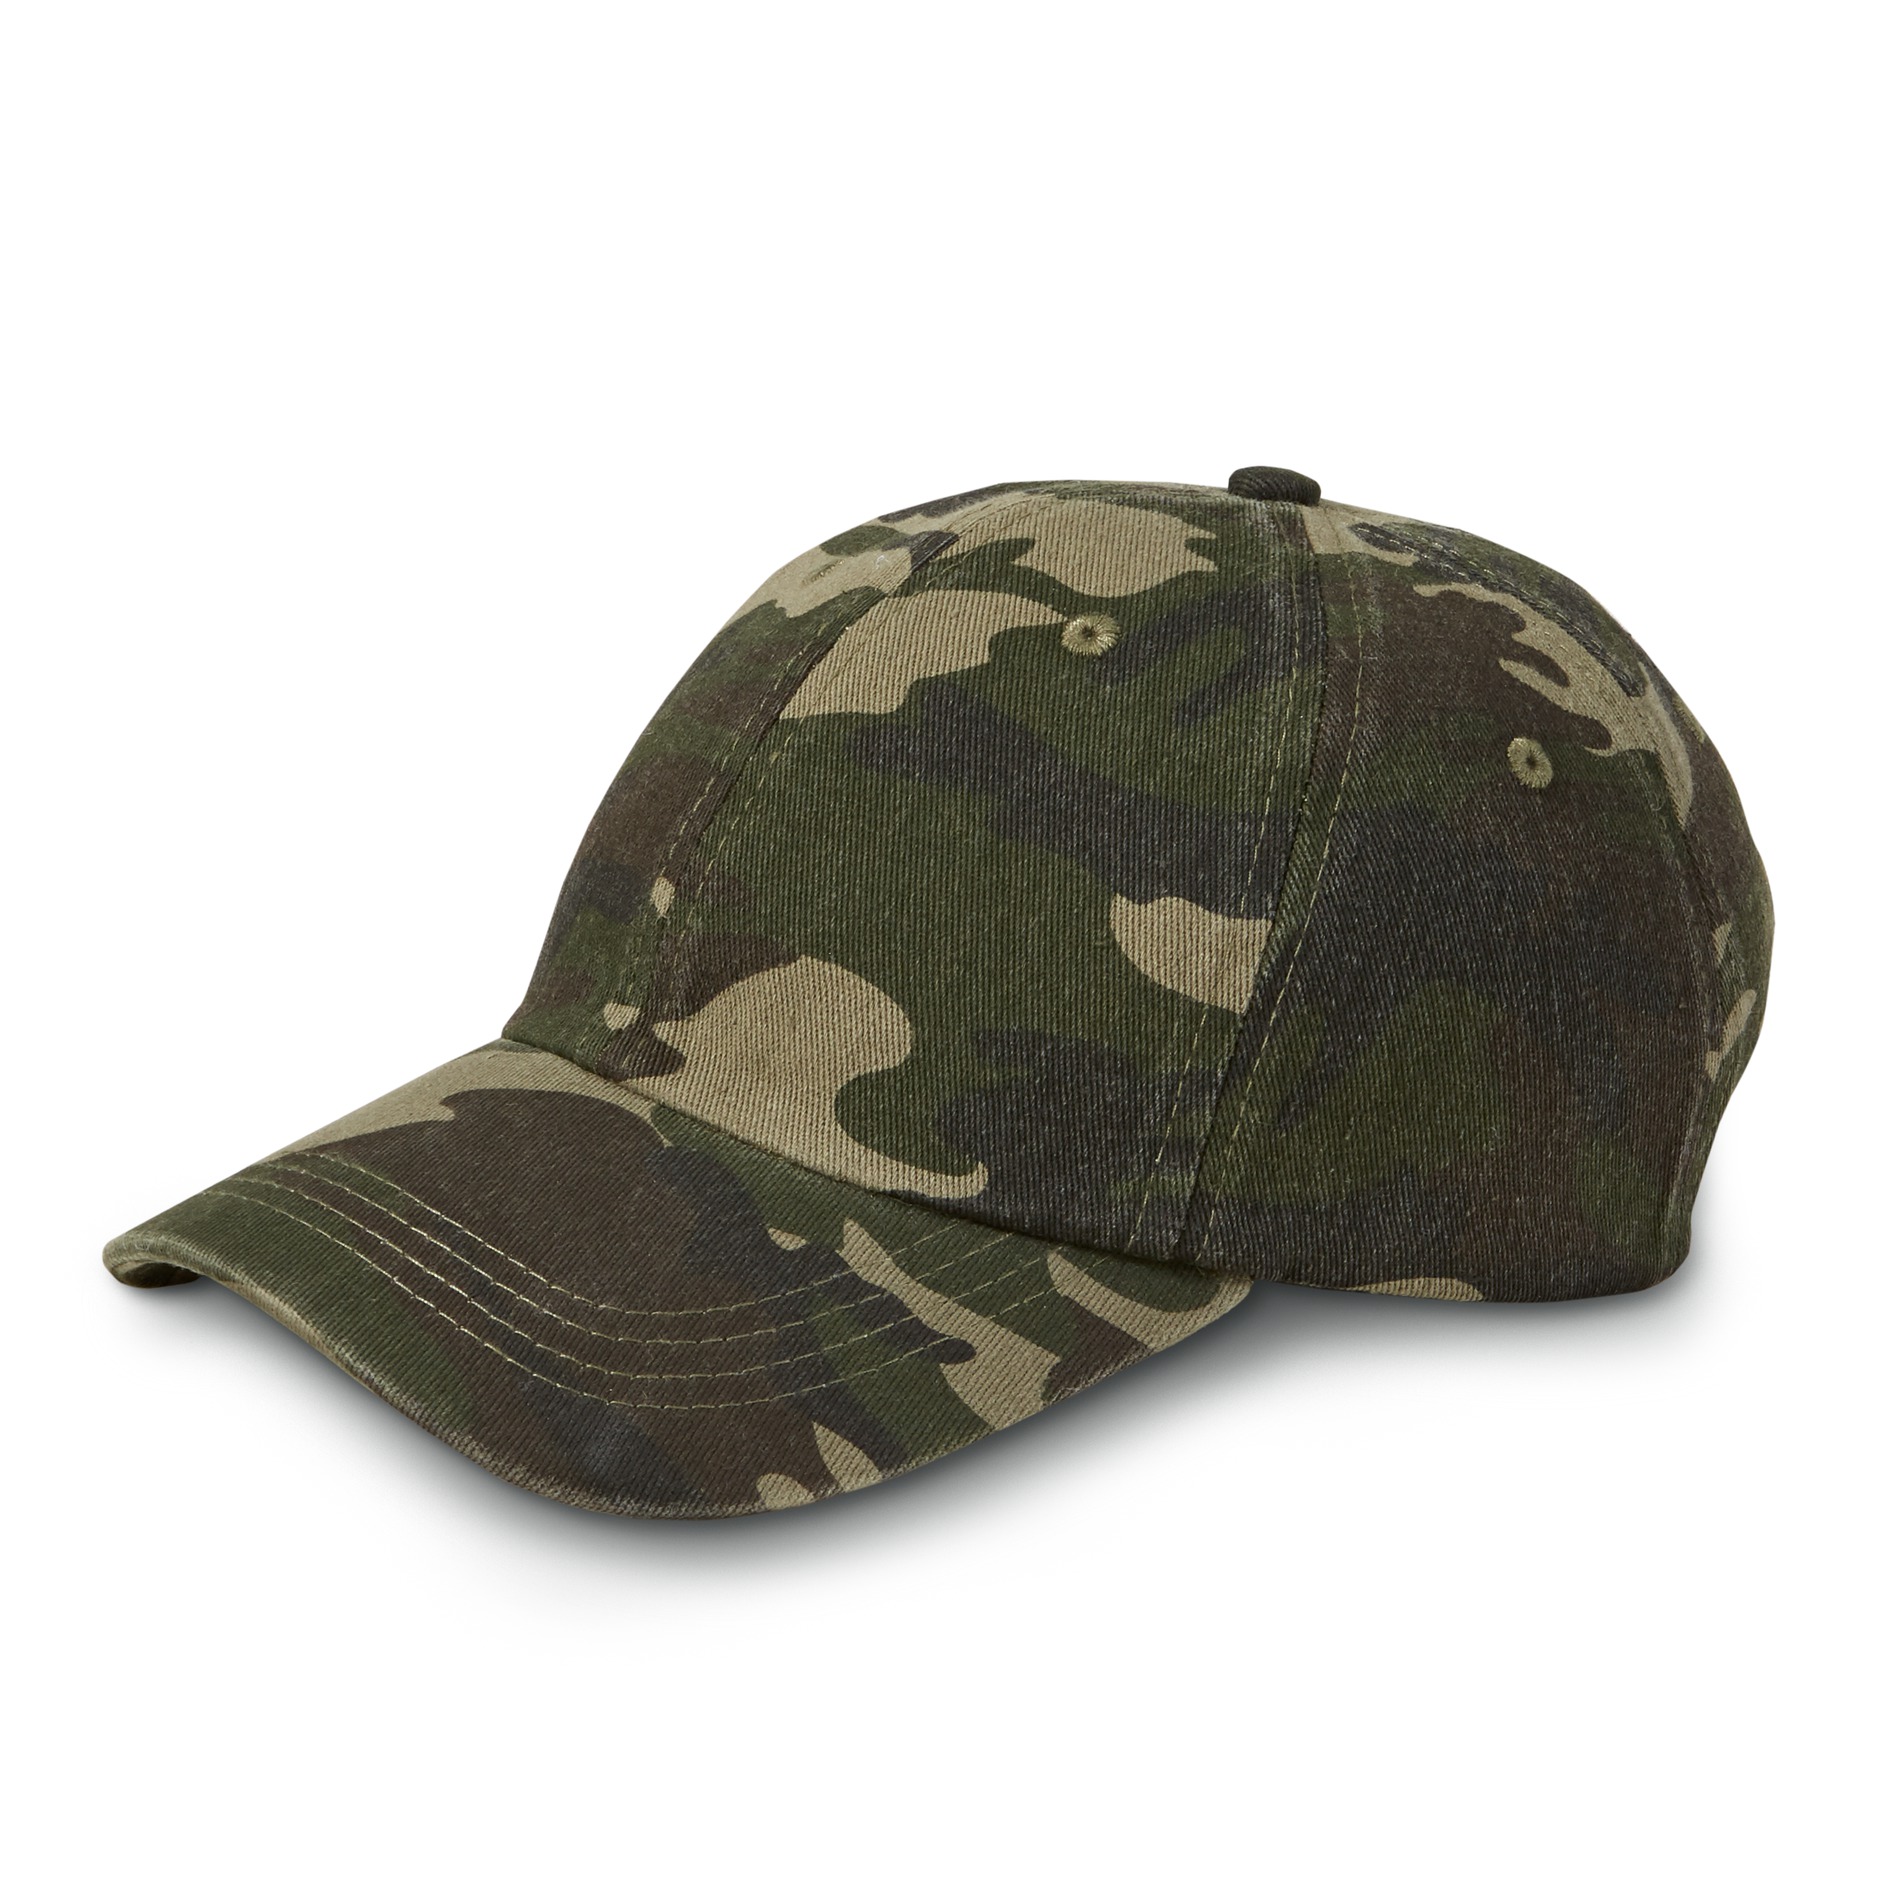 Women's Baseball Hat - Camouflage